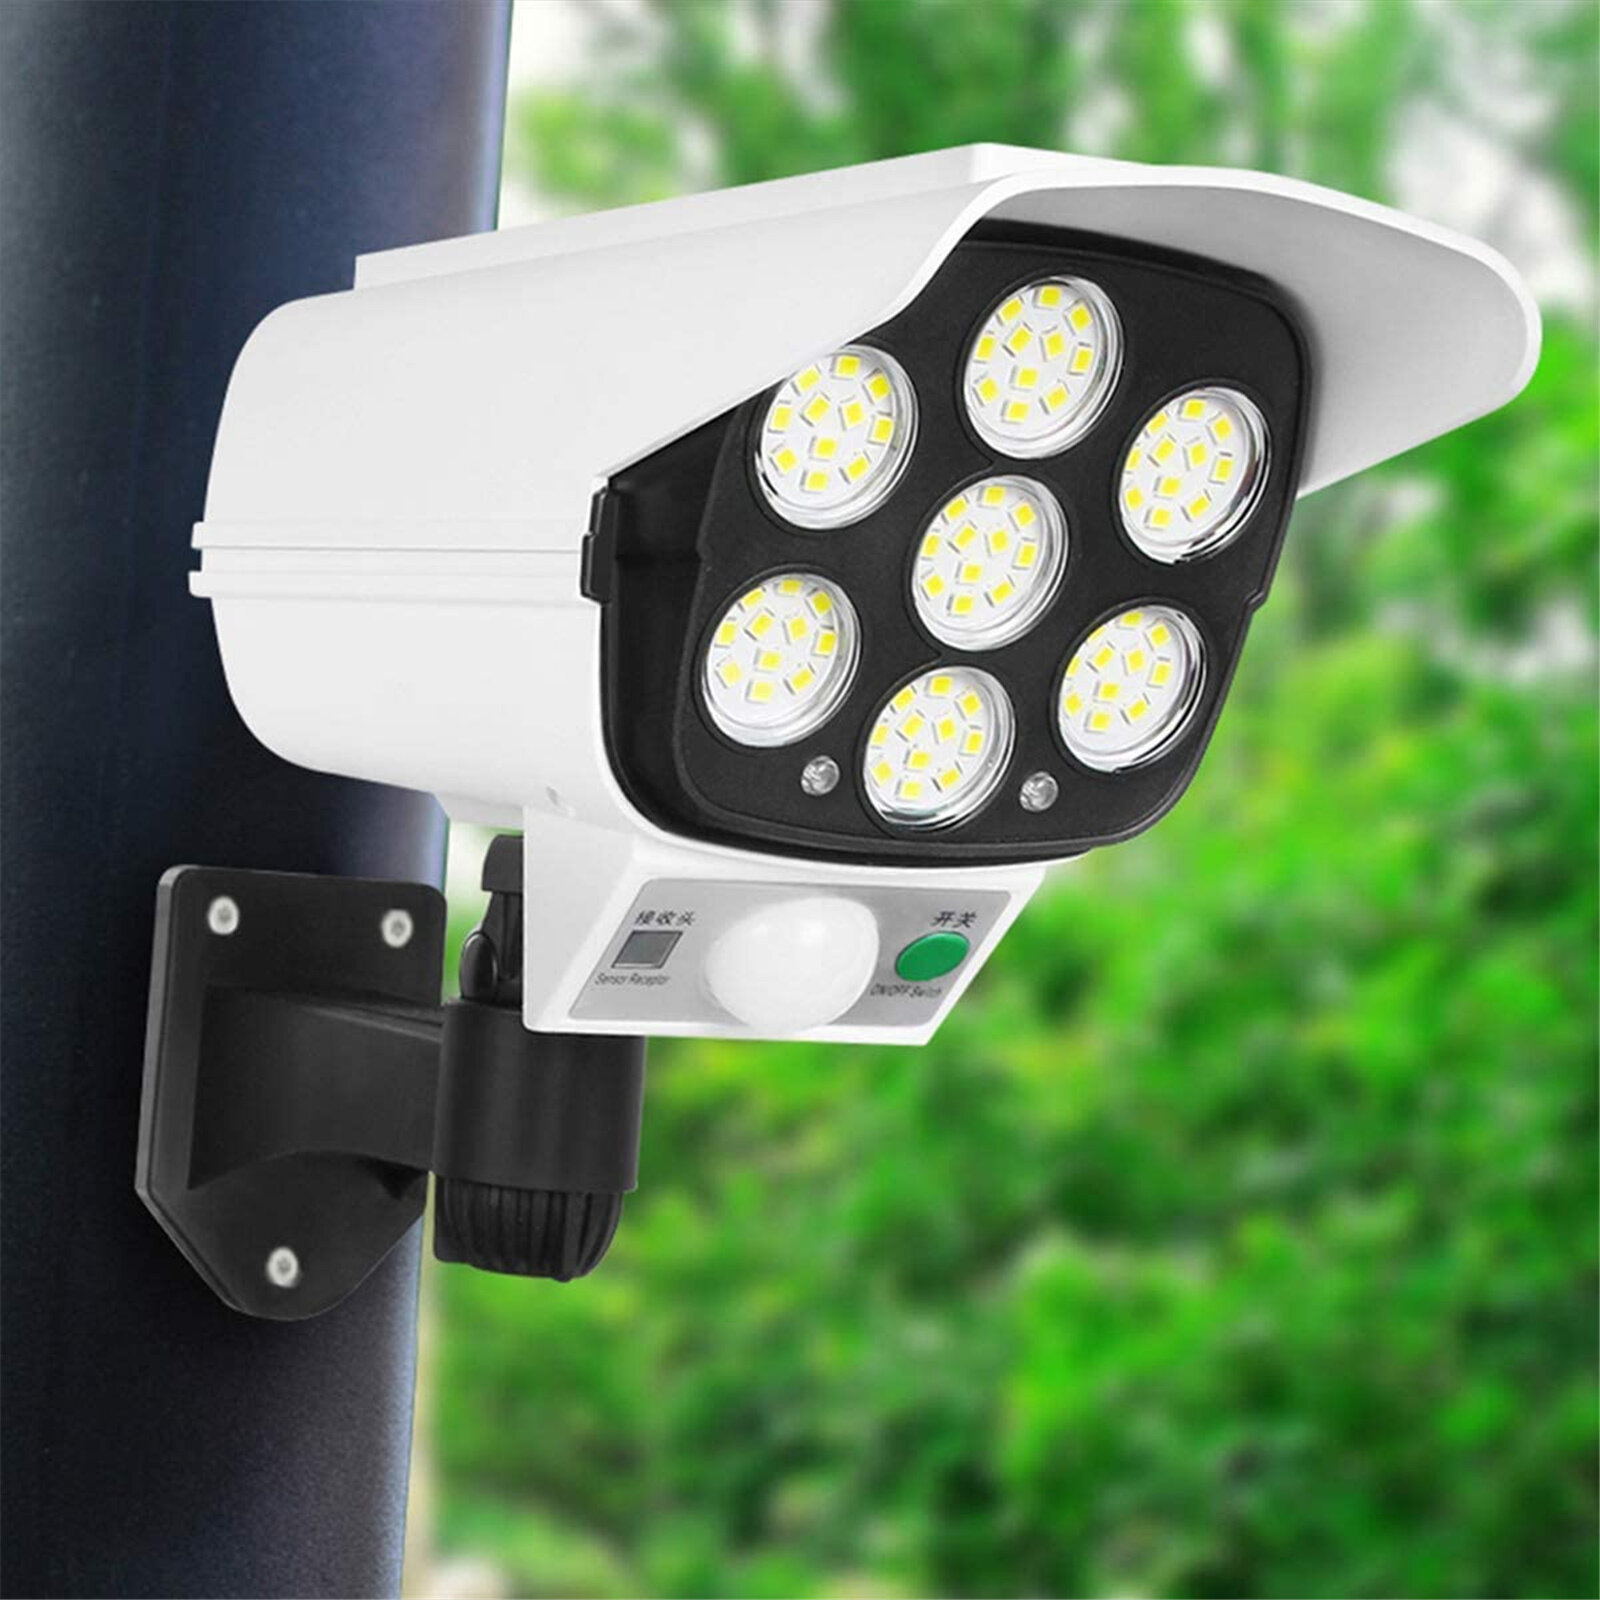 77 LED Solar Security Light PIR Motion Sensor Wall Lamp Garden Home Fake Camera 